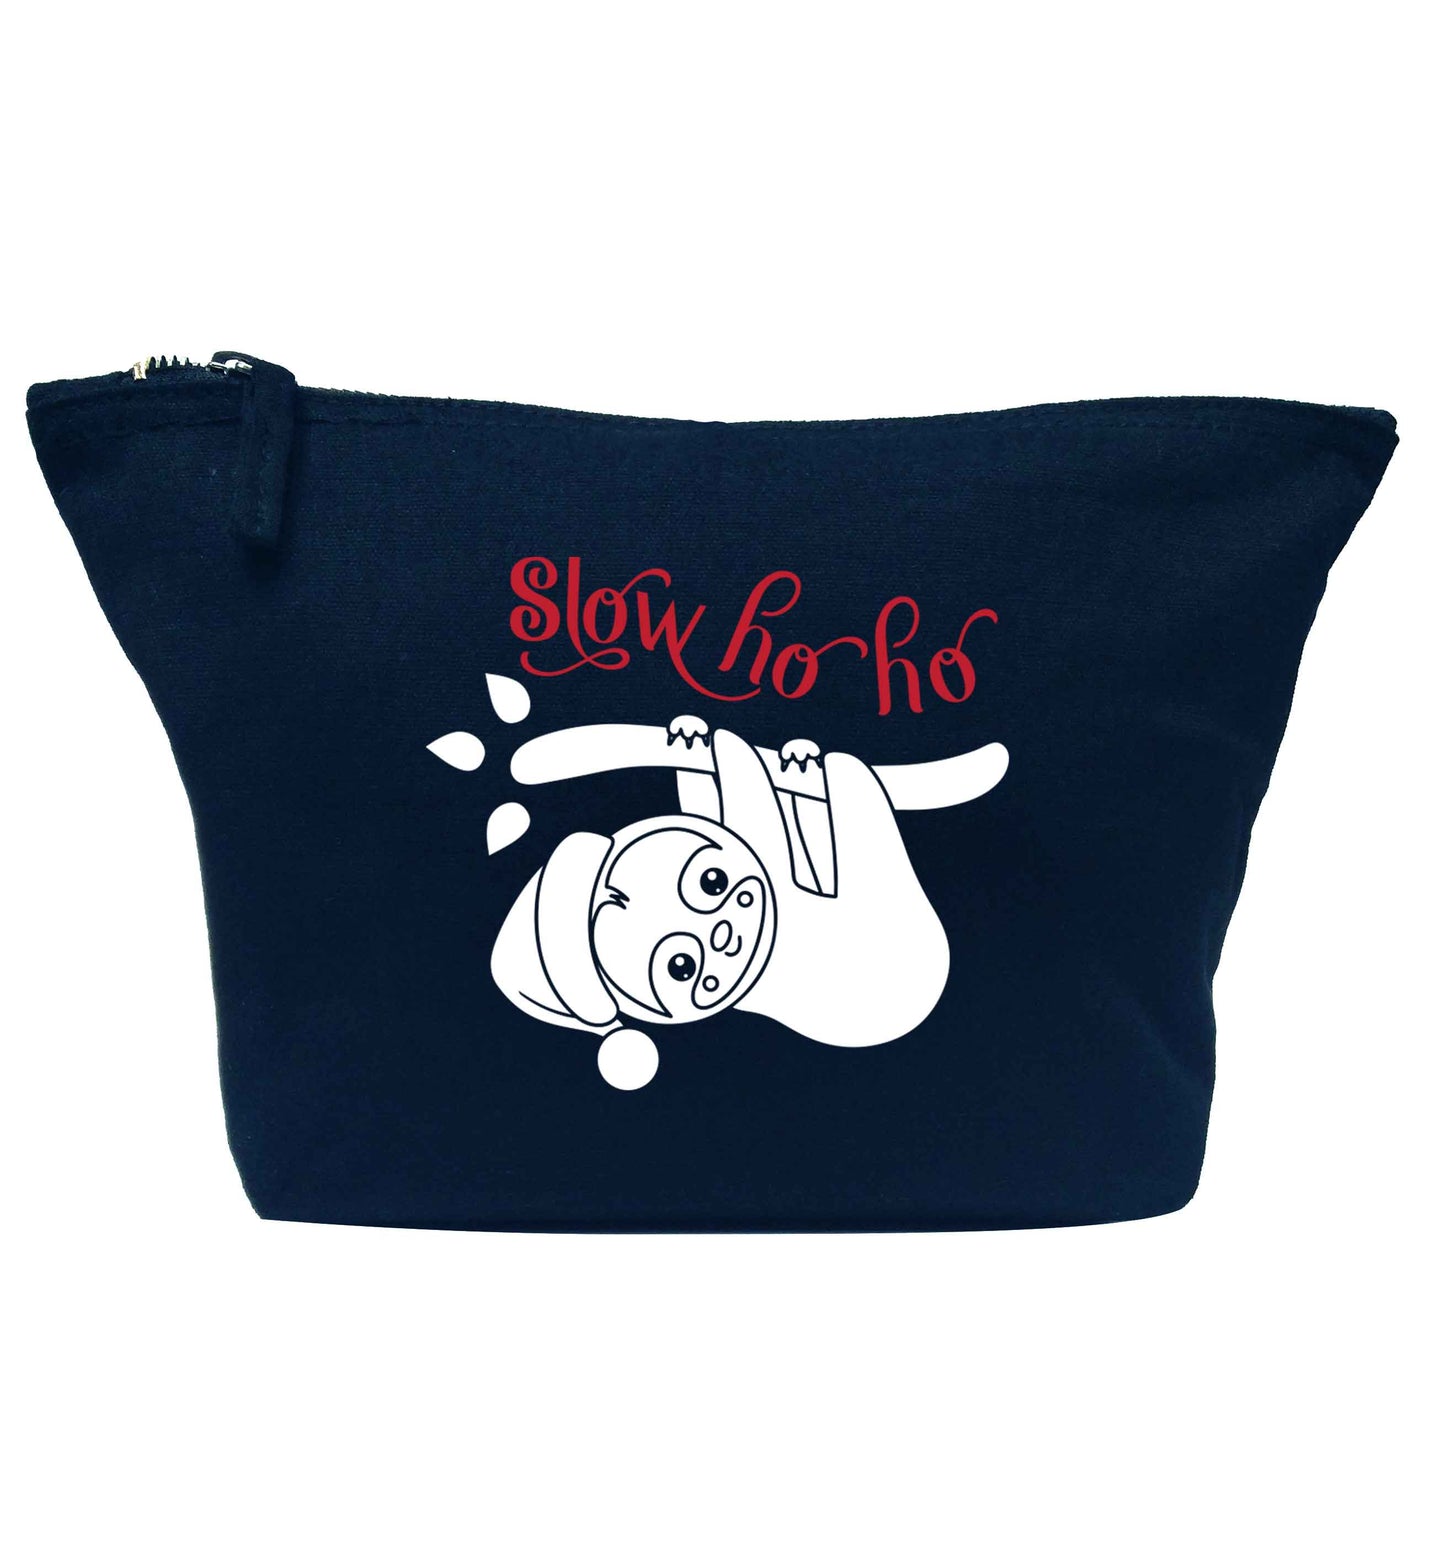 Slow Ho Ho navy makeup bag